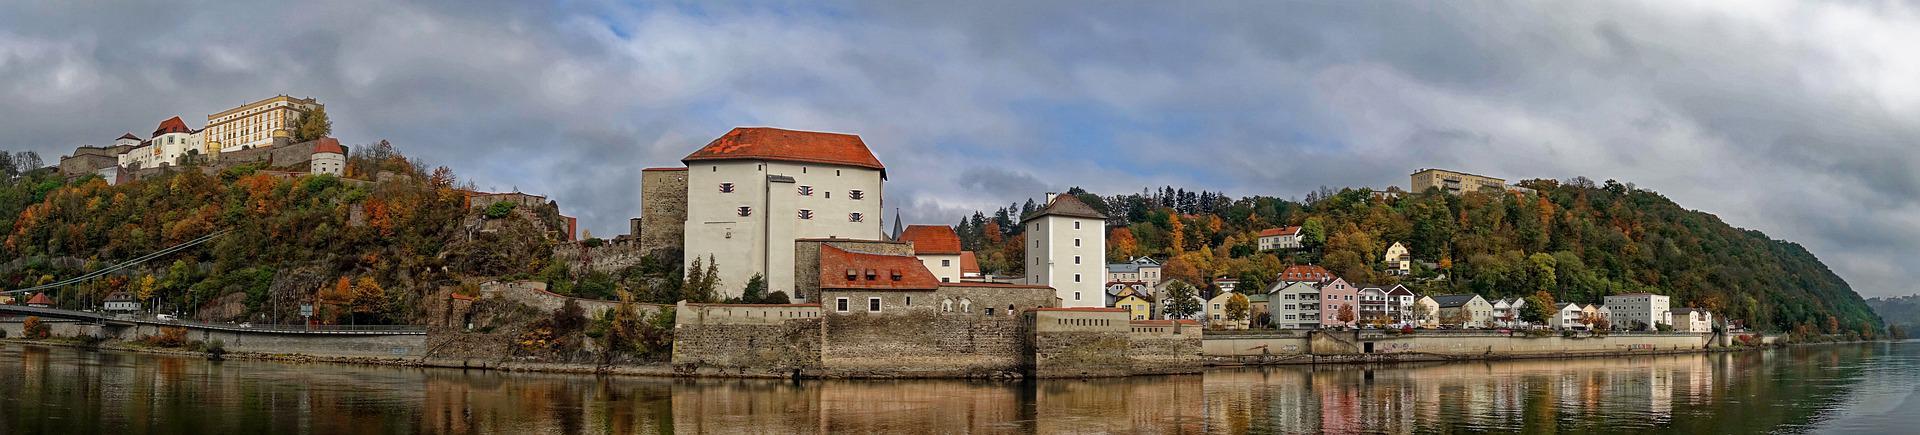 Passau, Deutschland, Panorama